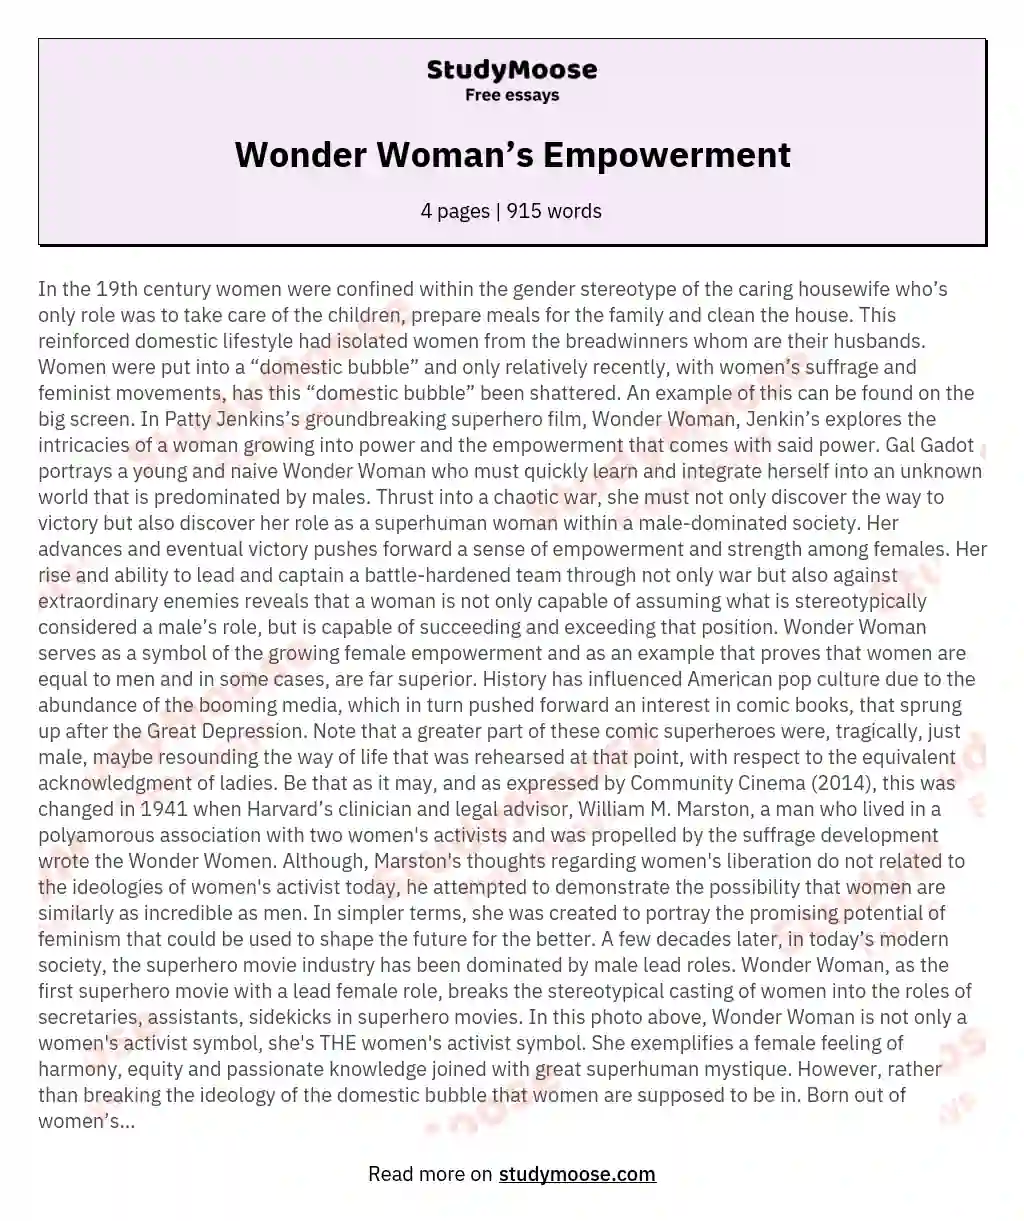 Wonder Woman’s Empowerment